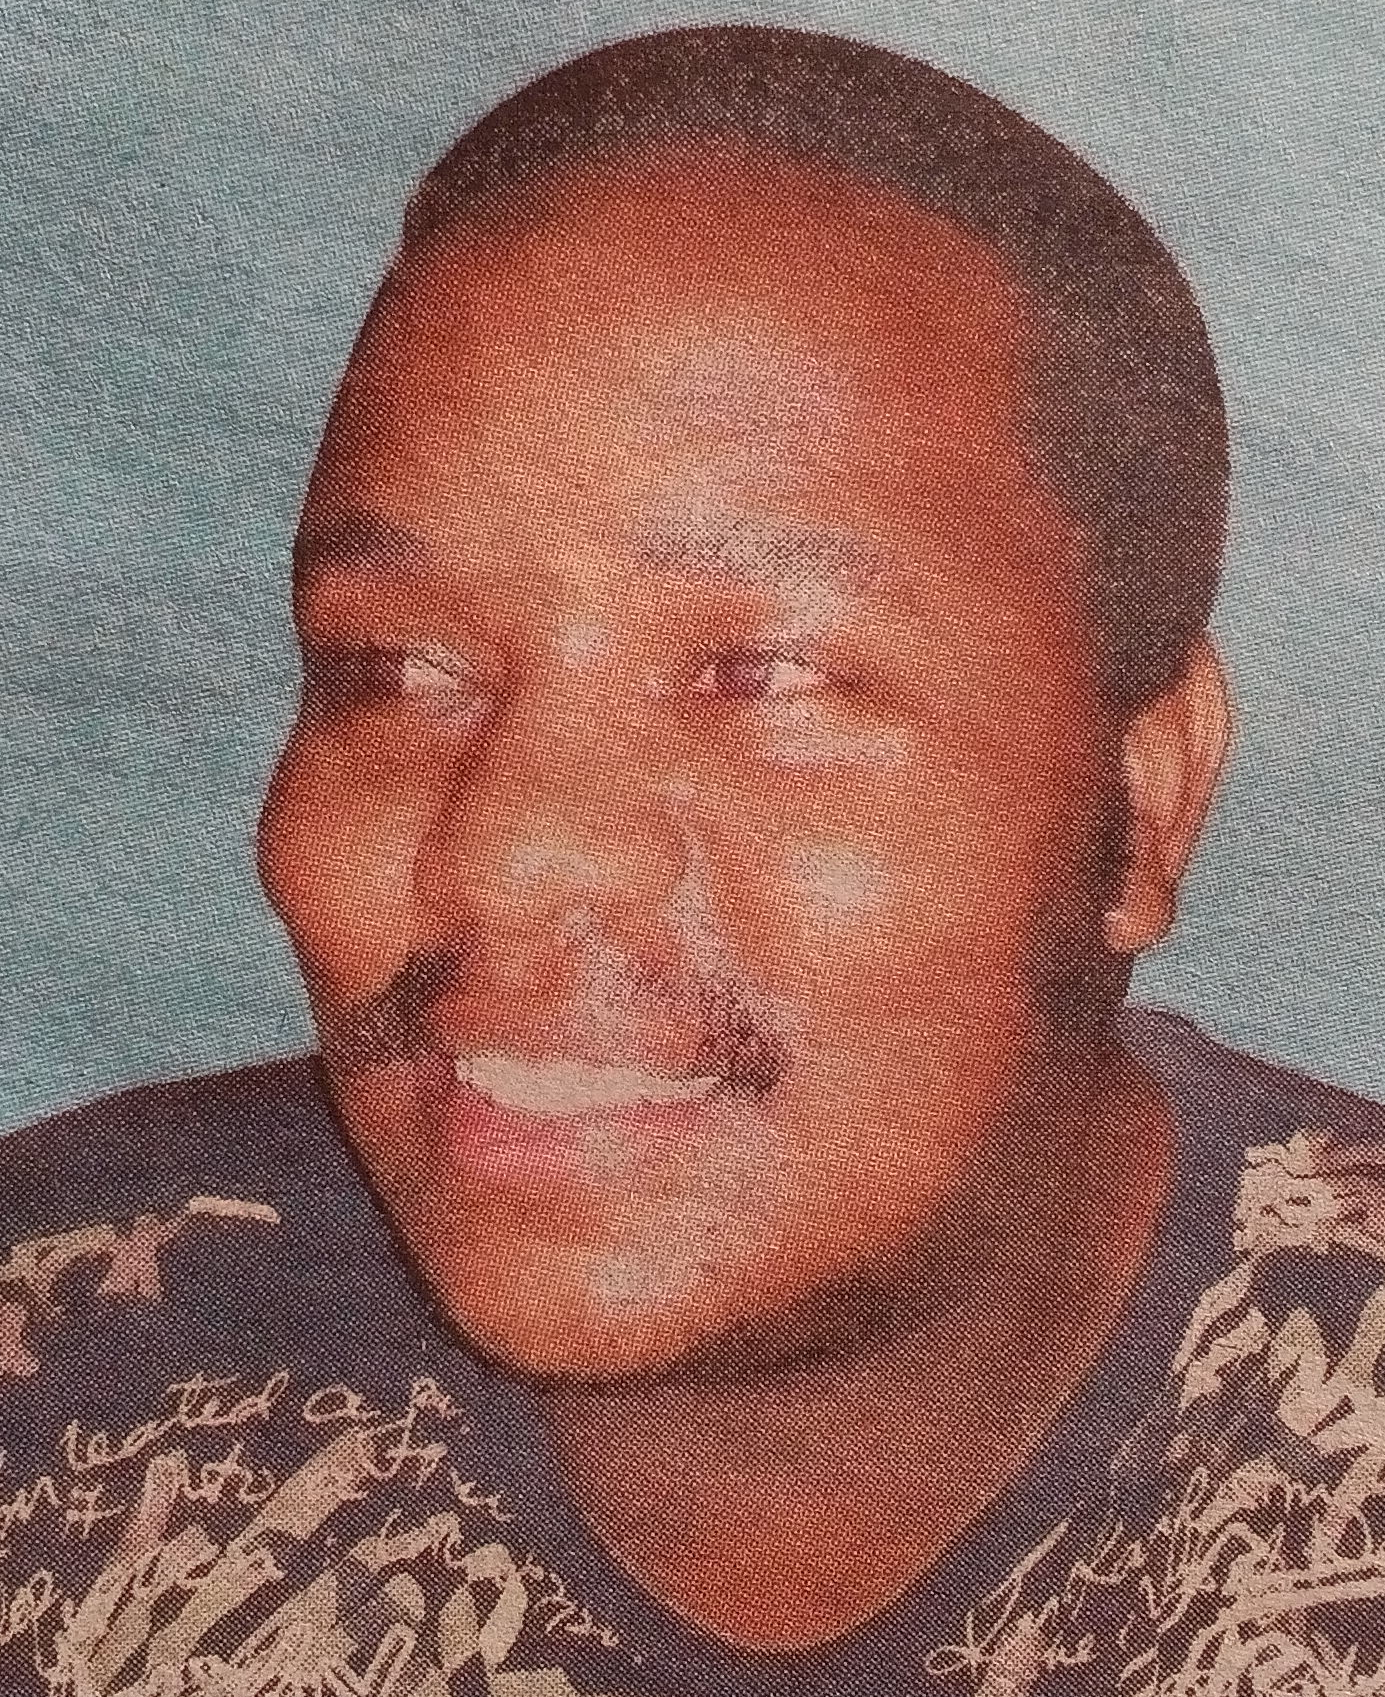 Obituary Image of Brian Mwangi Ndereba